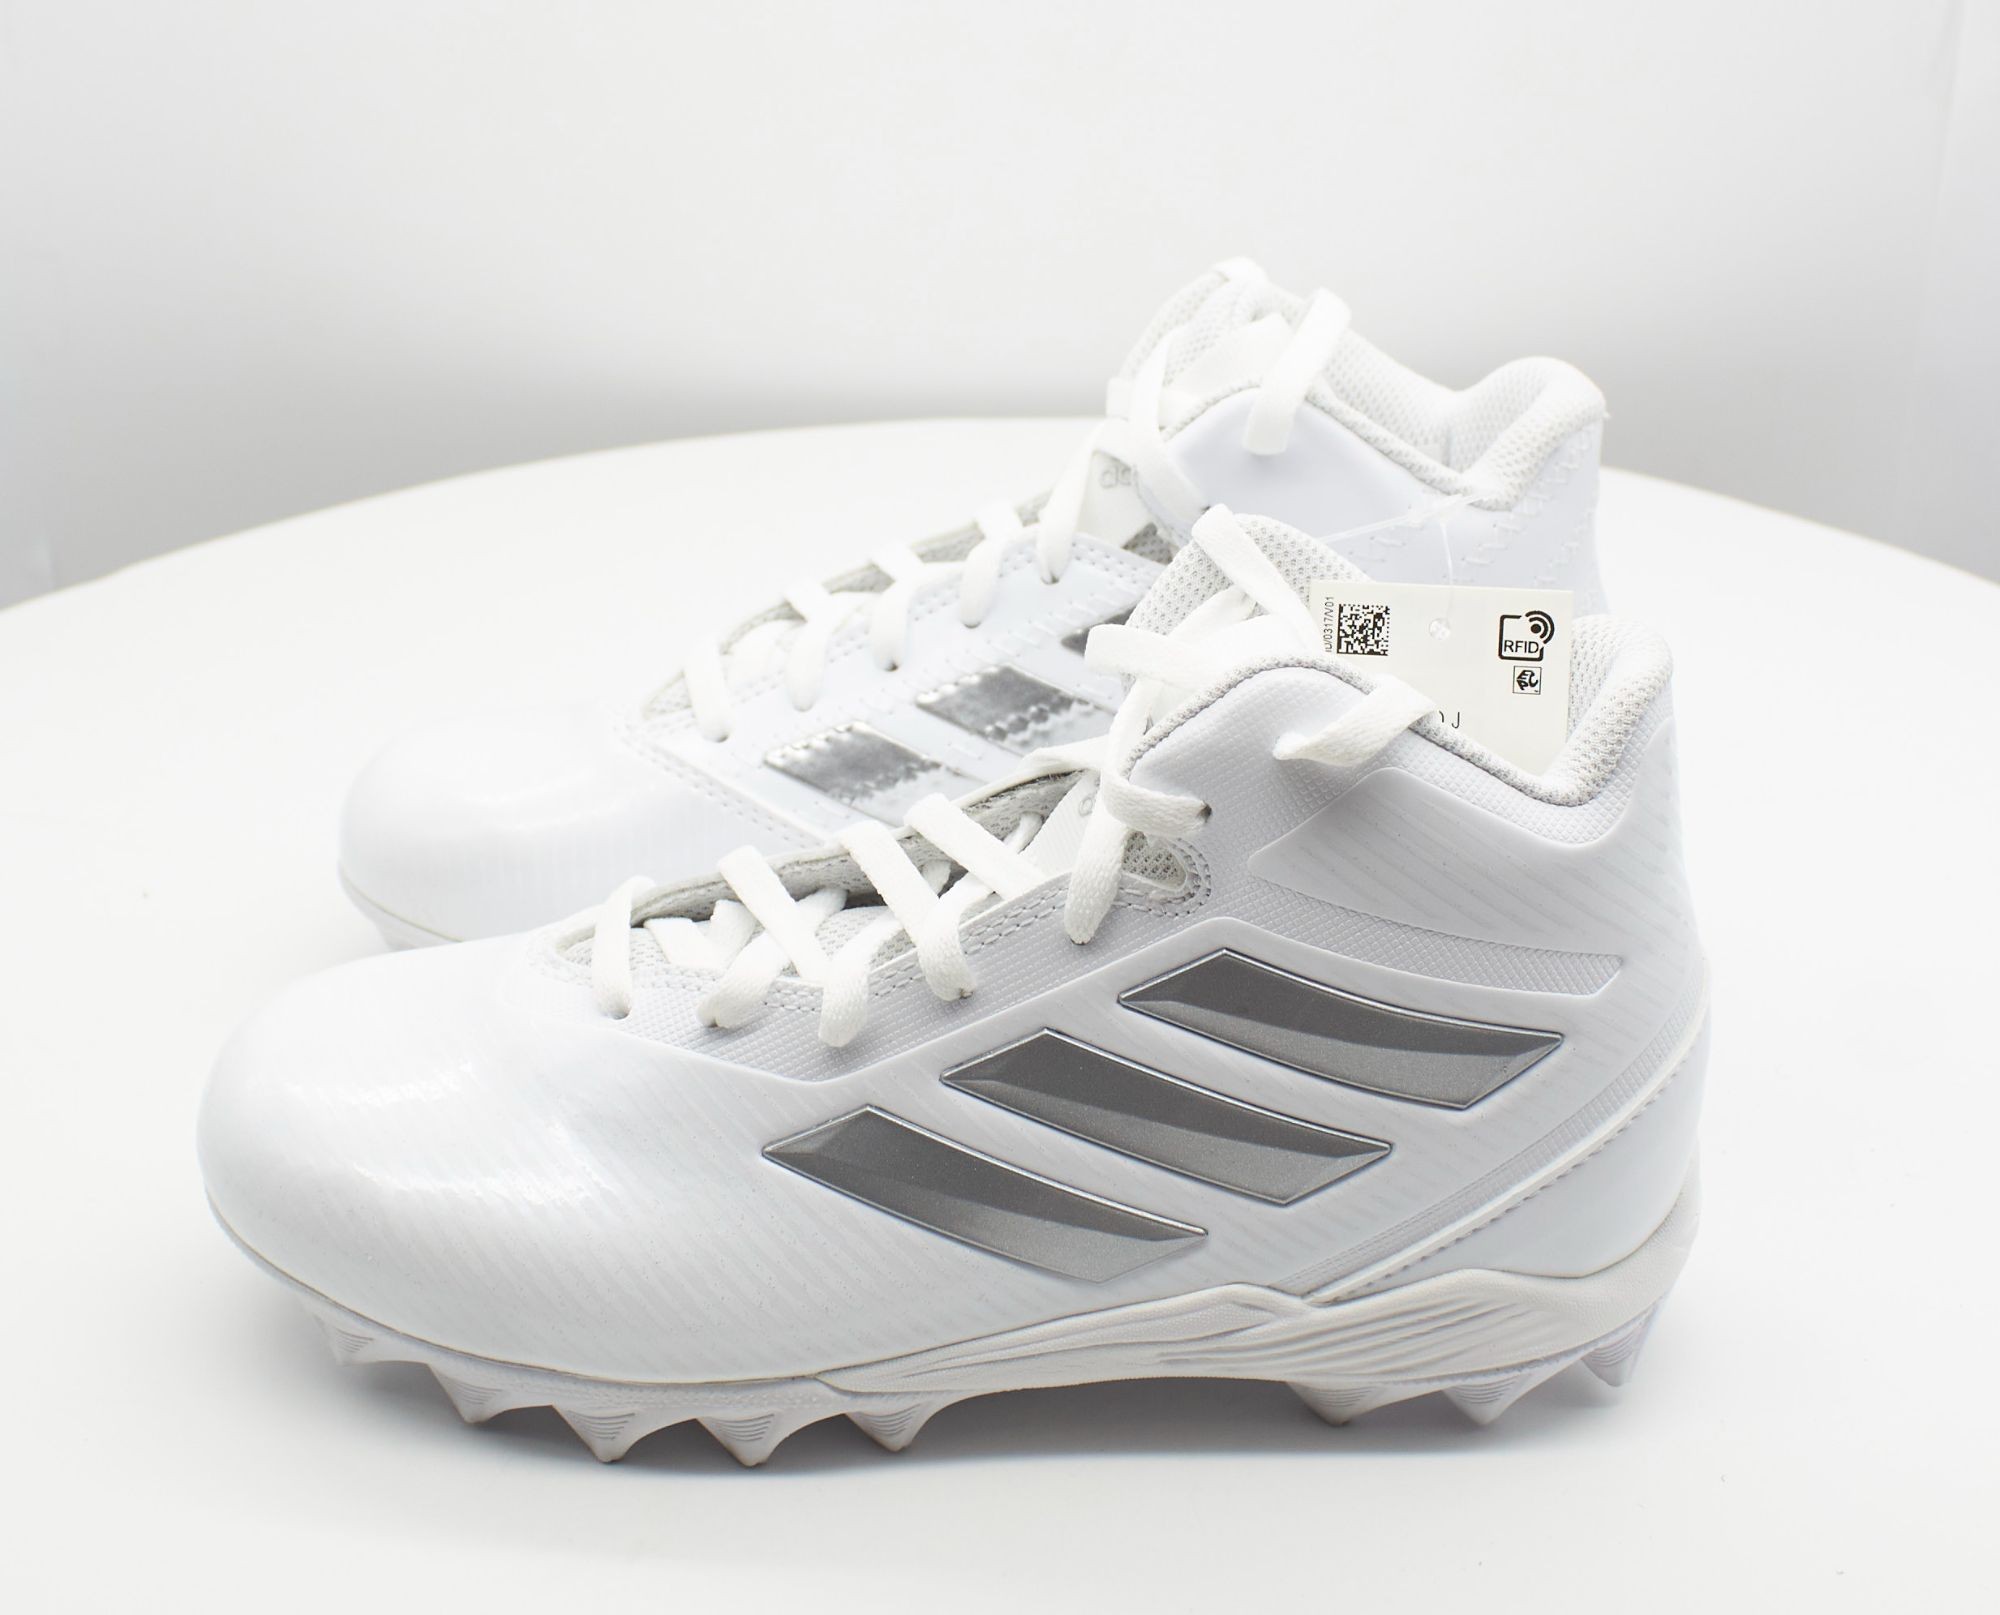 Adidas Boy's Freak Ultra Football Shoe